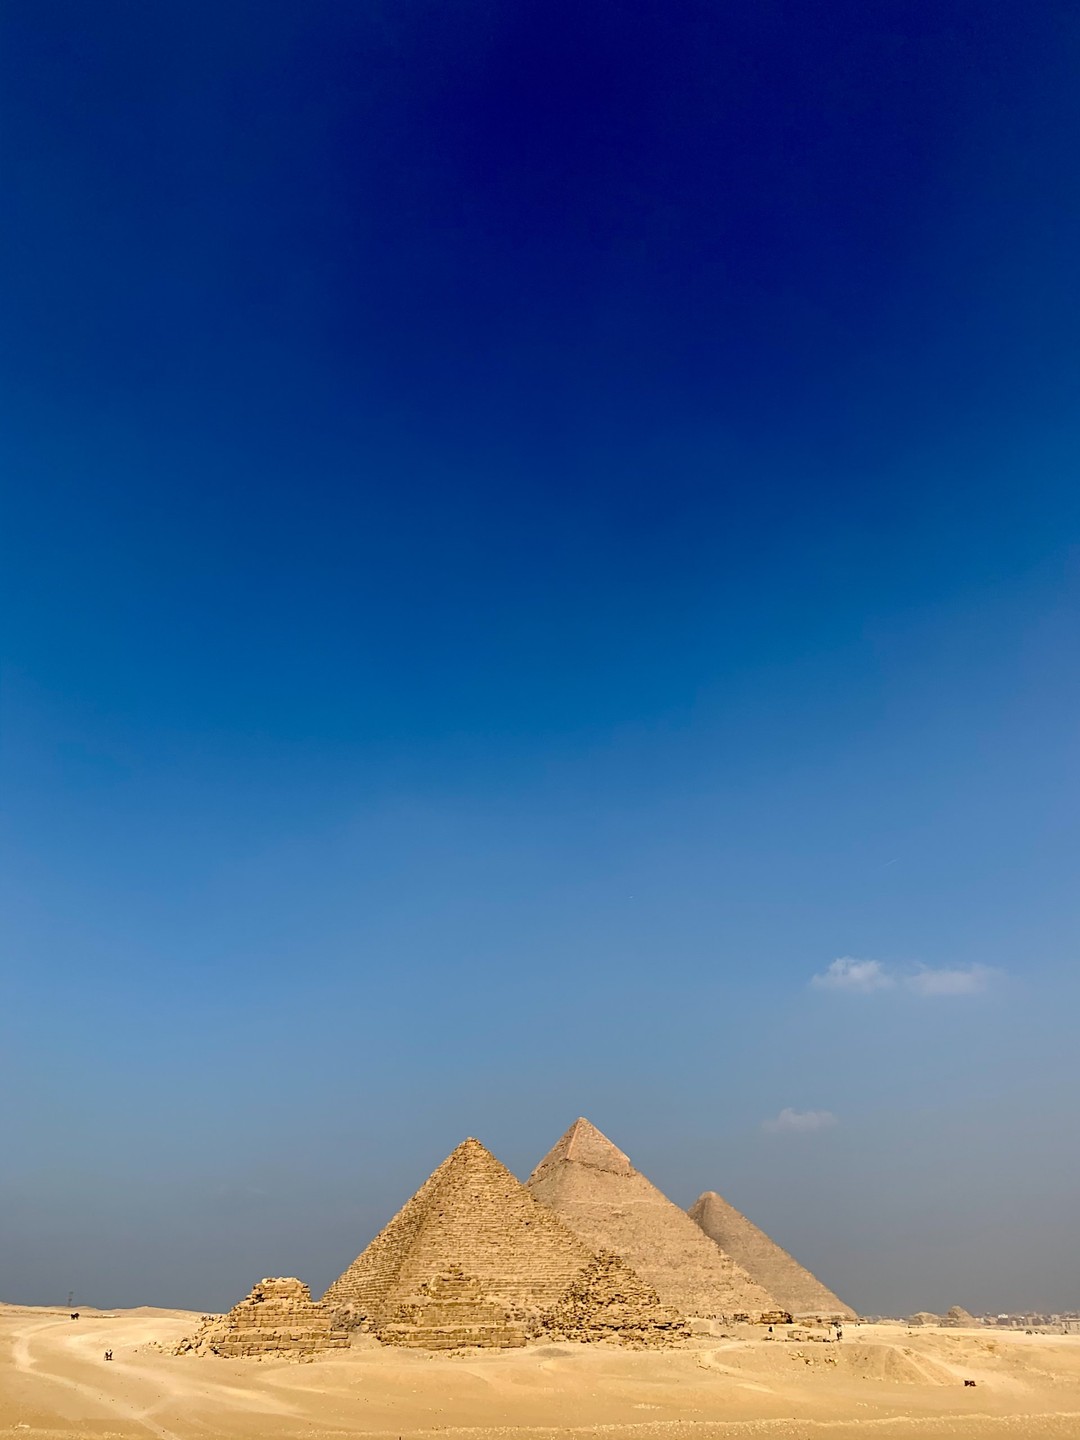 Pirámides de Giza, Al Haram, Egypt: One of the best romantic getaways for couples who love culture.